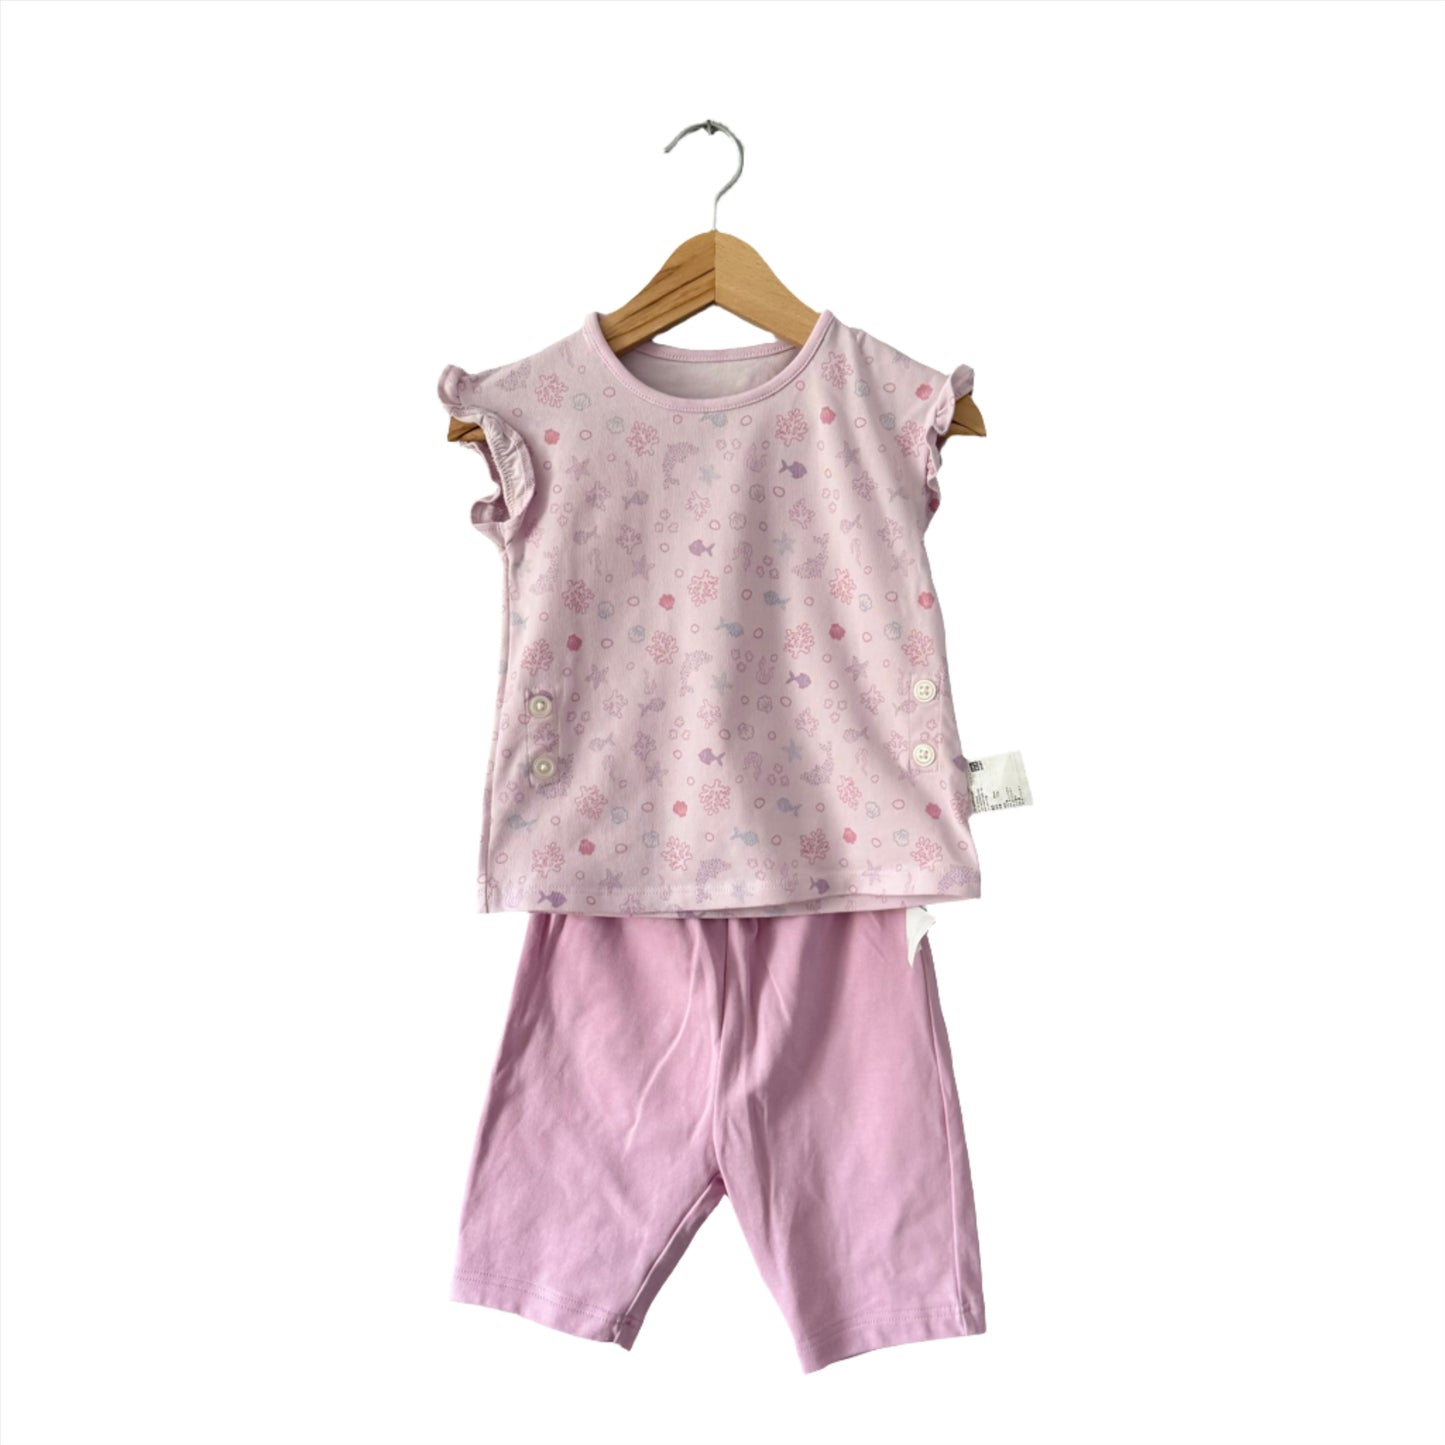 Uniqlo / Pink, sea pattern pajama set / 12M